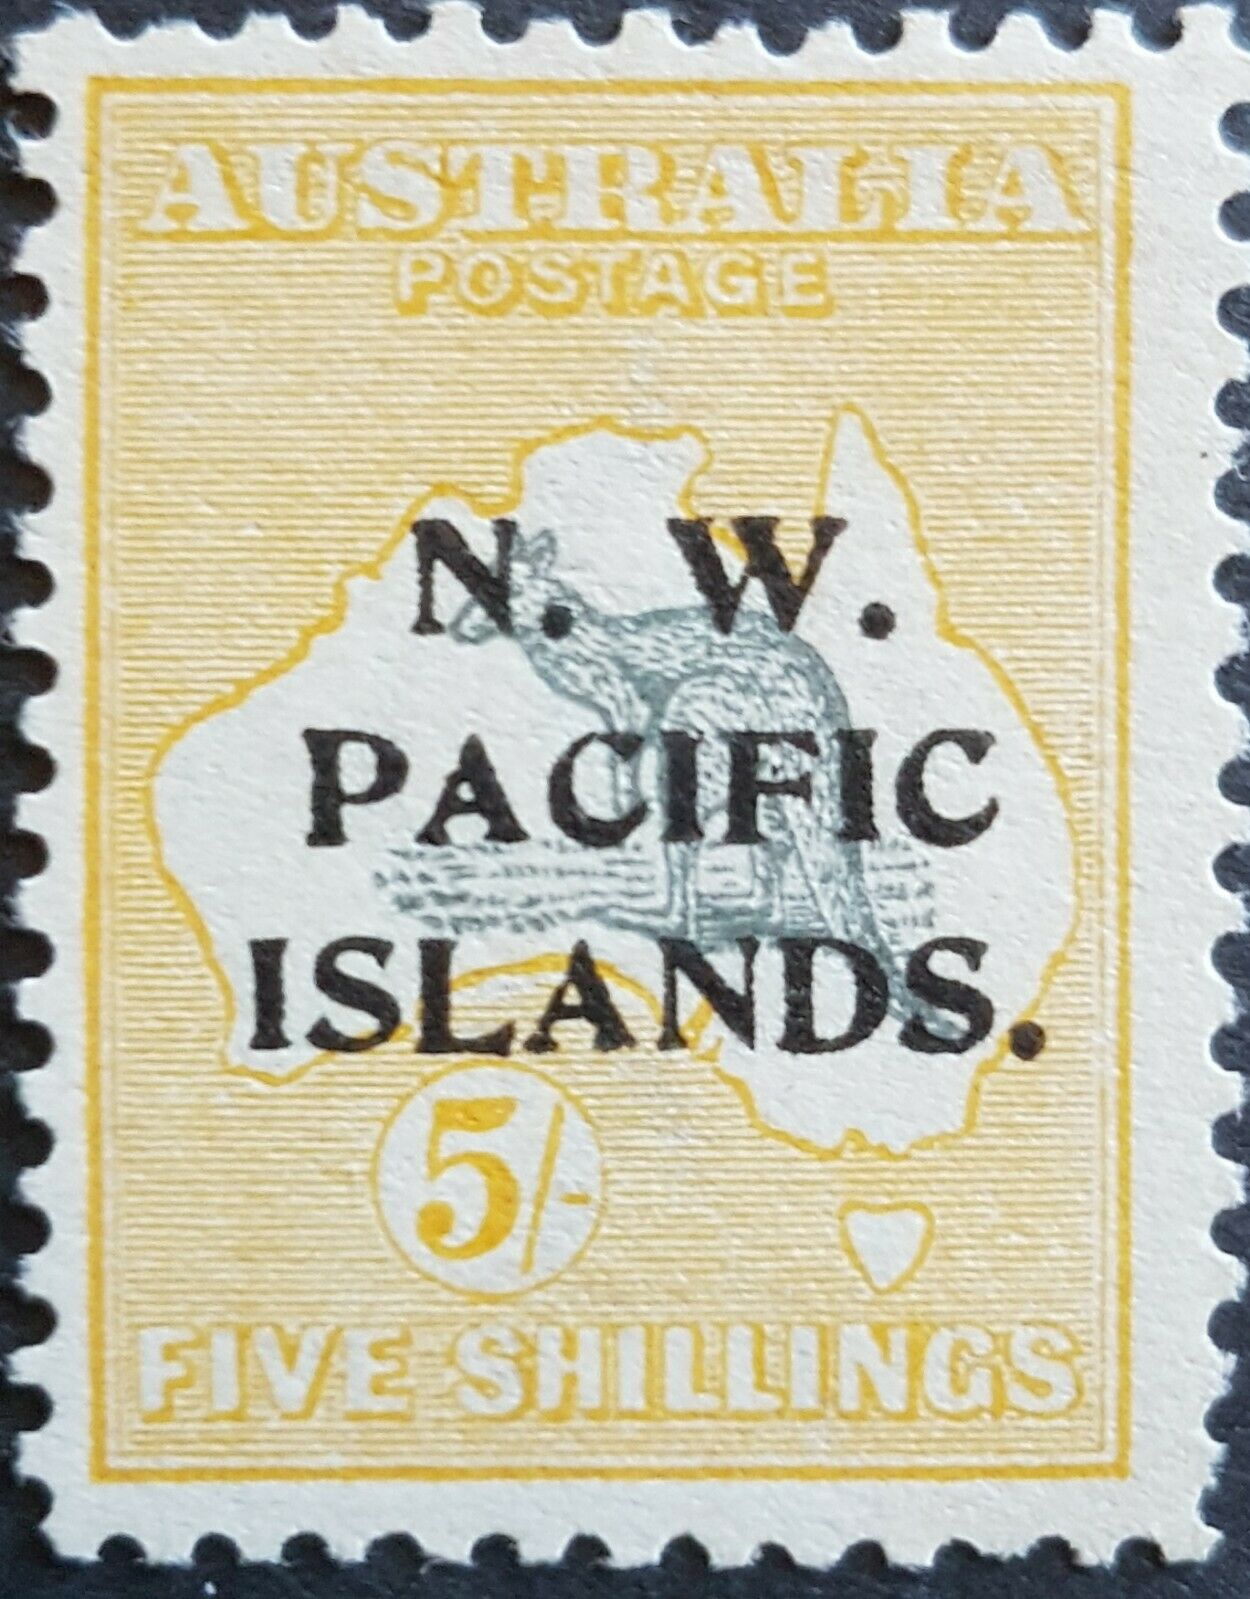 NWPI New Guinea on Australia 5/- Kangaroo SG 83 type A, 48 issued very rare mint